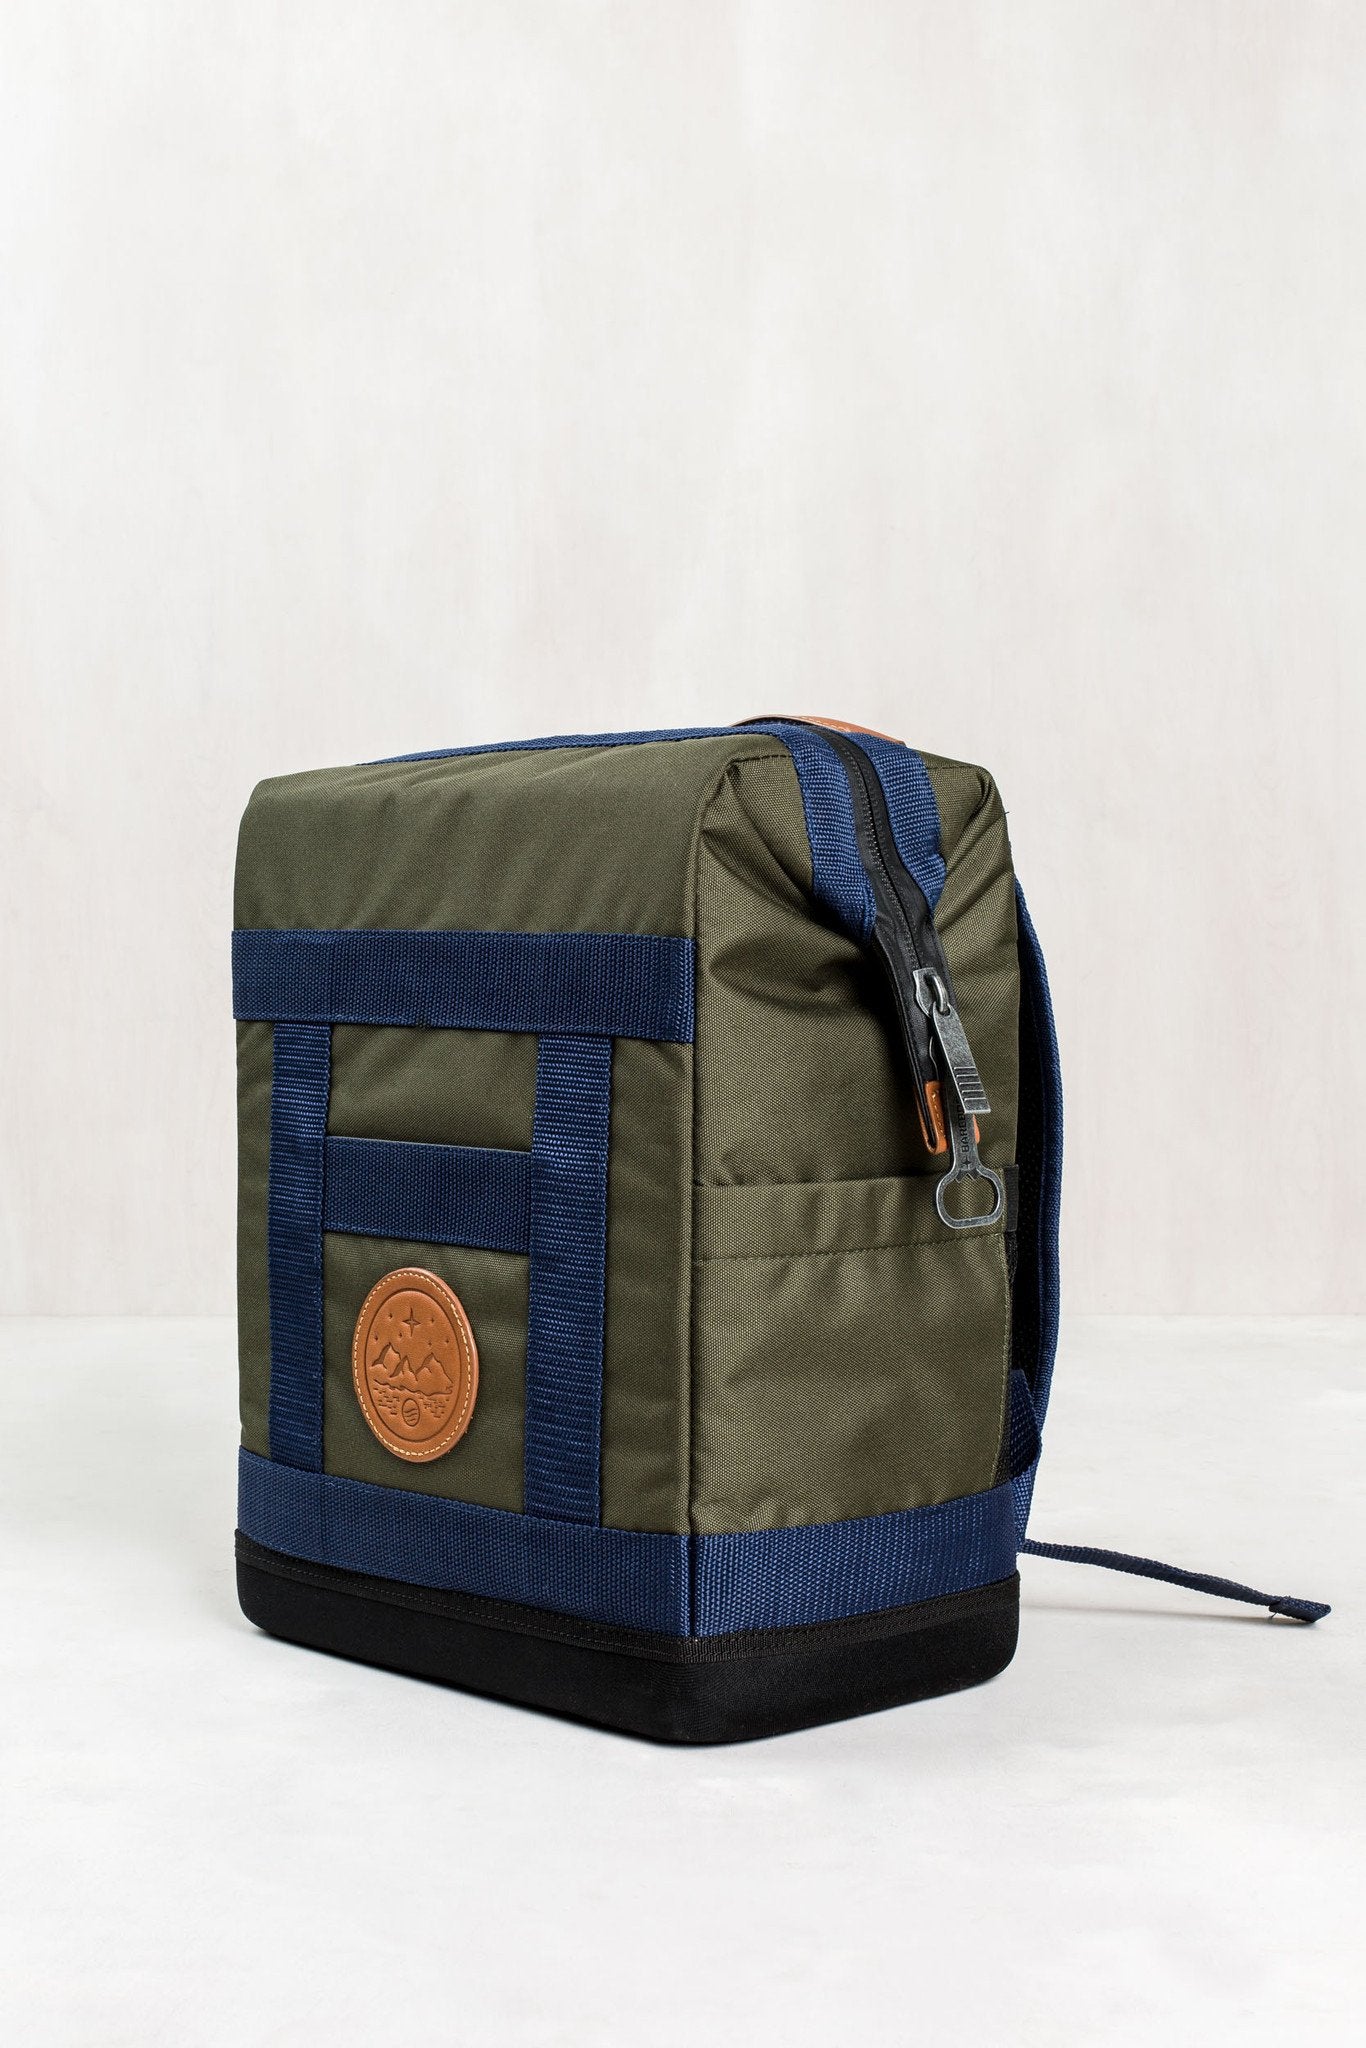 UBB x Barebones Cooler Backpack